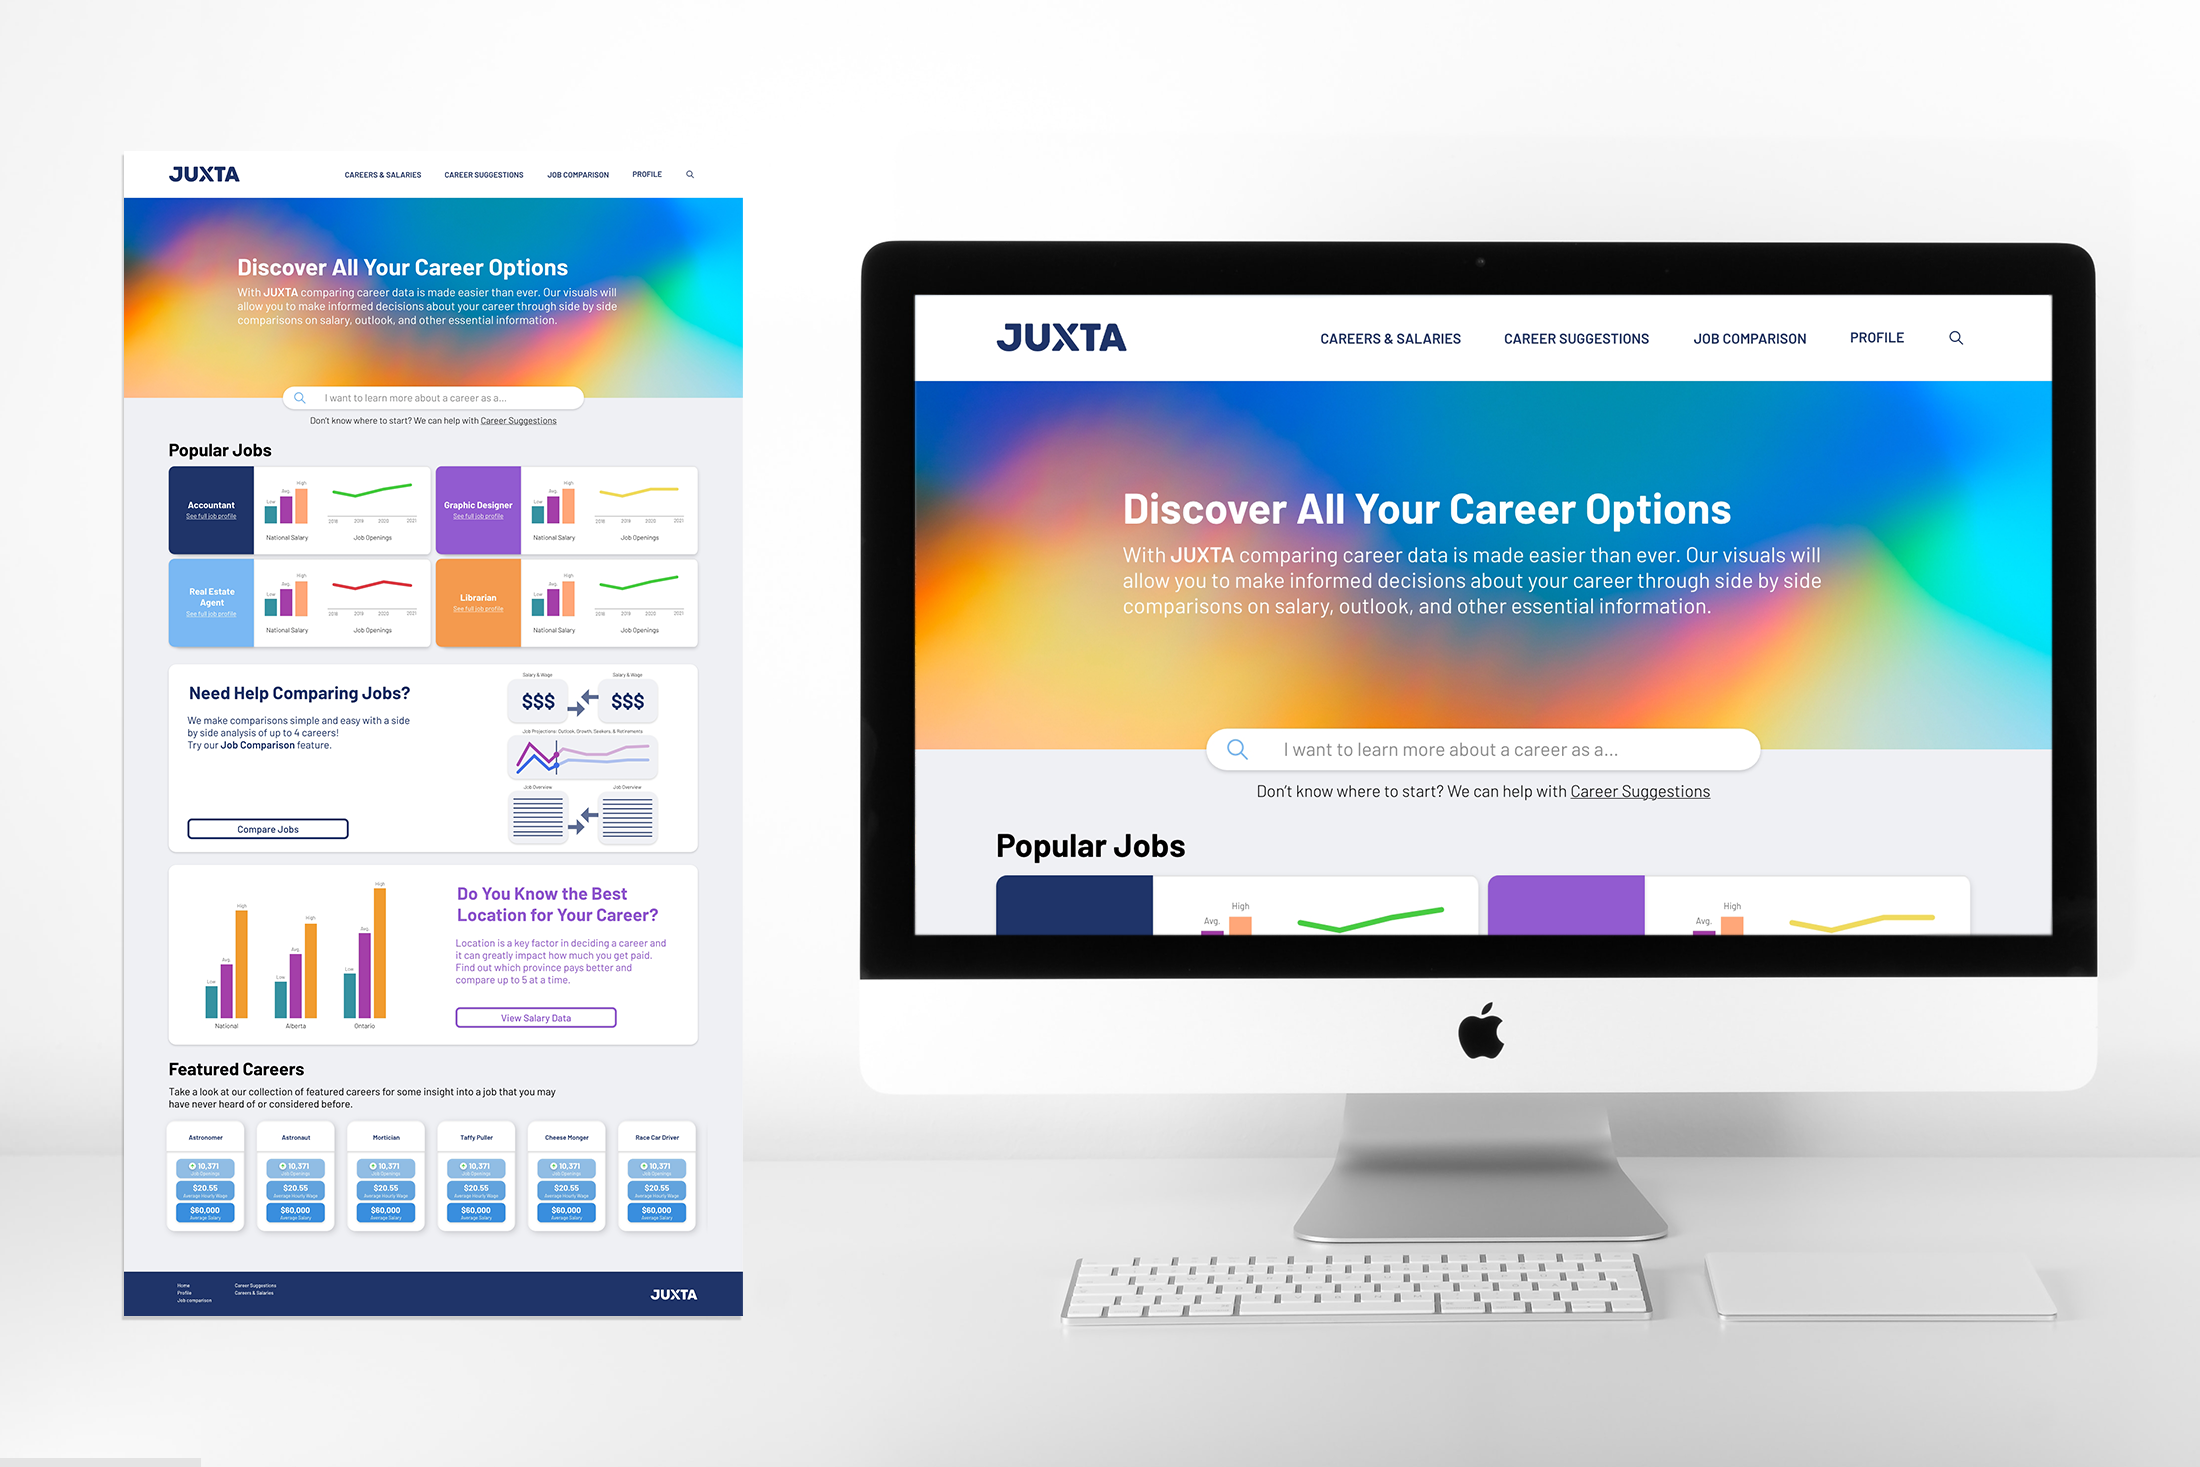 JUXTA: The Career Comparison Application - Image 1